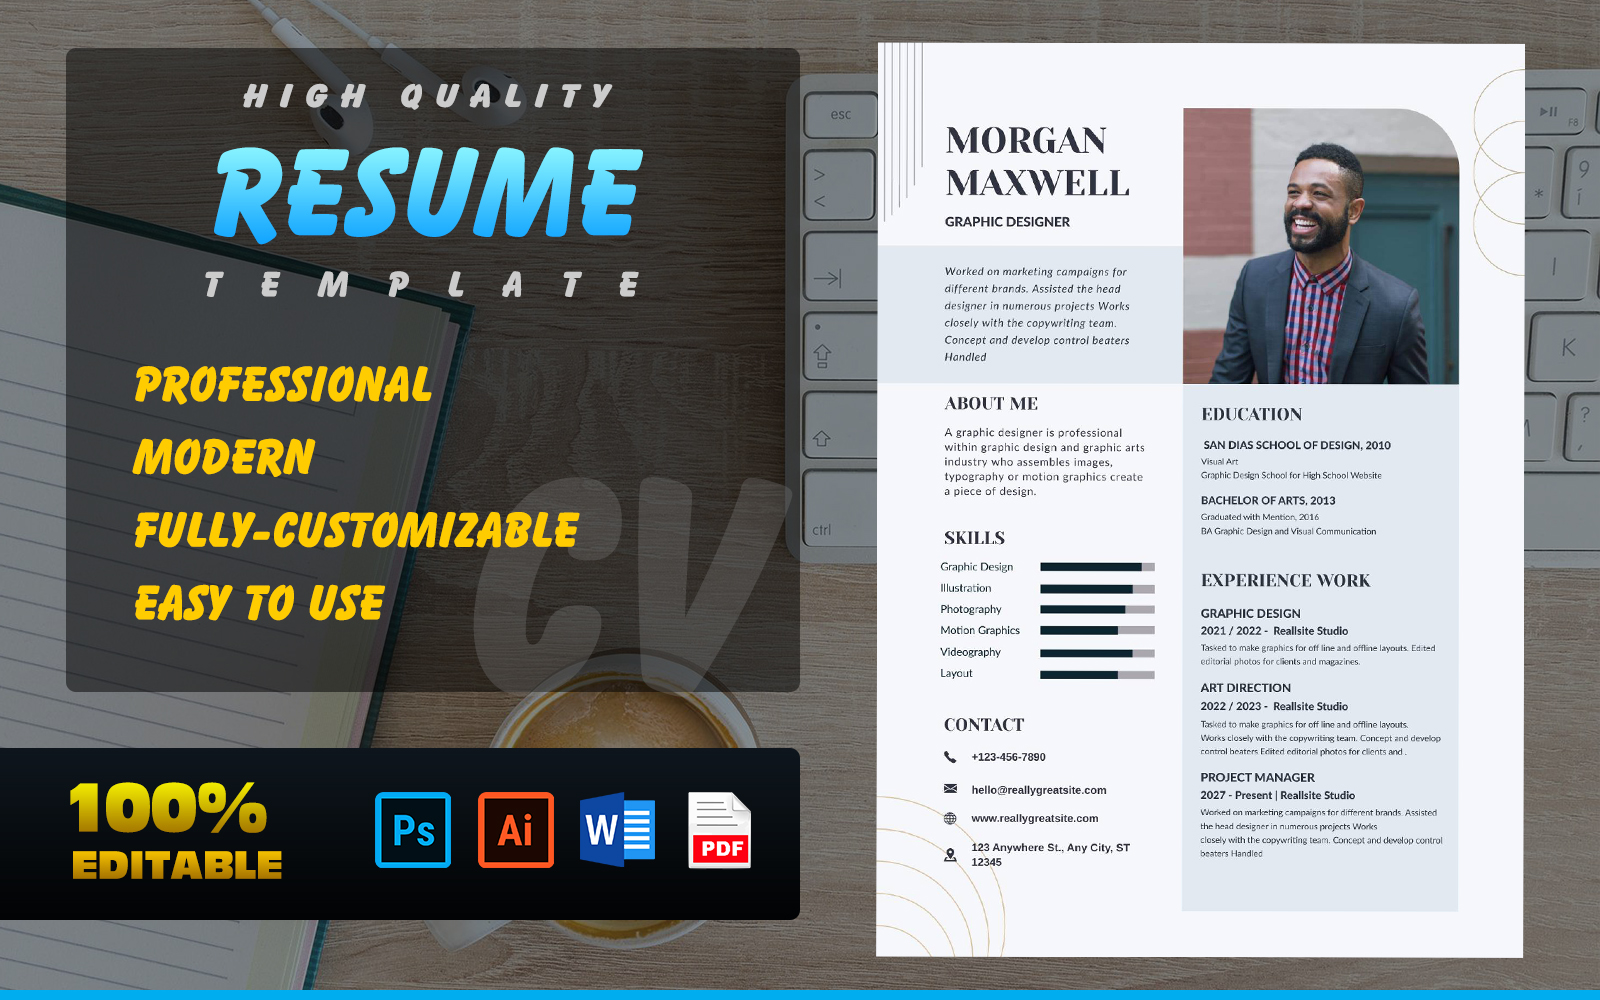 Resume / CV | Professional | Modern | High quality | 100% Editable